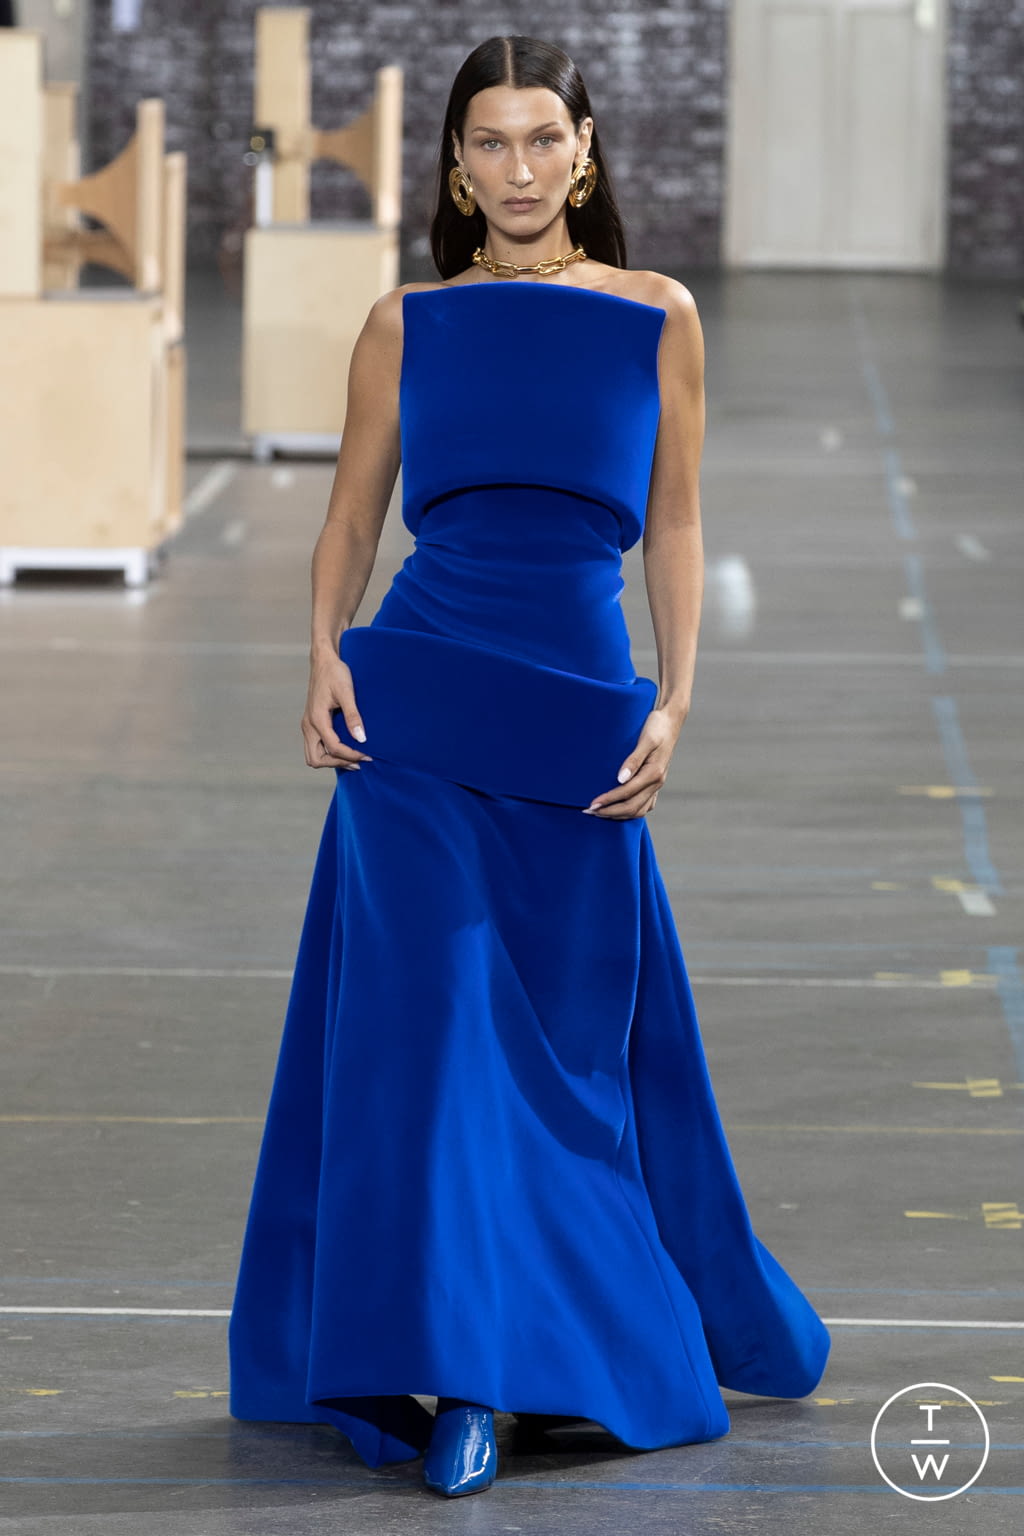 Fauré le Page FW21 womenswear accessories #15 - Tagwalk: The